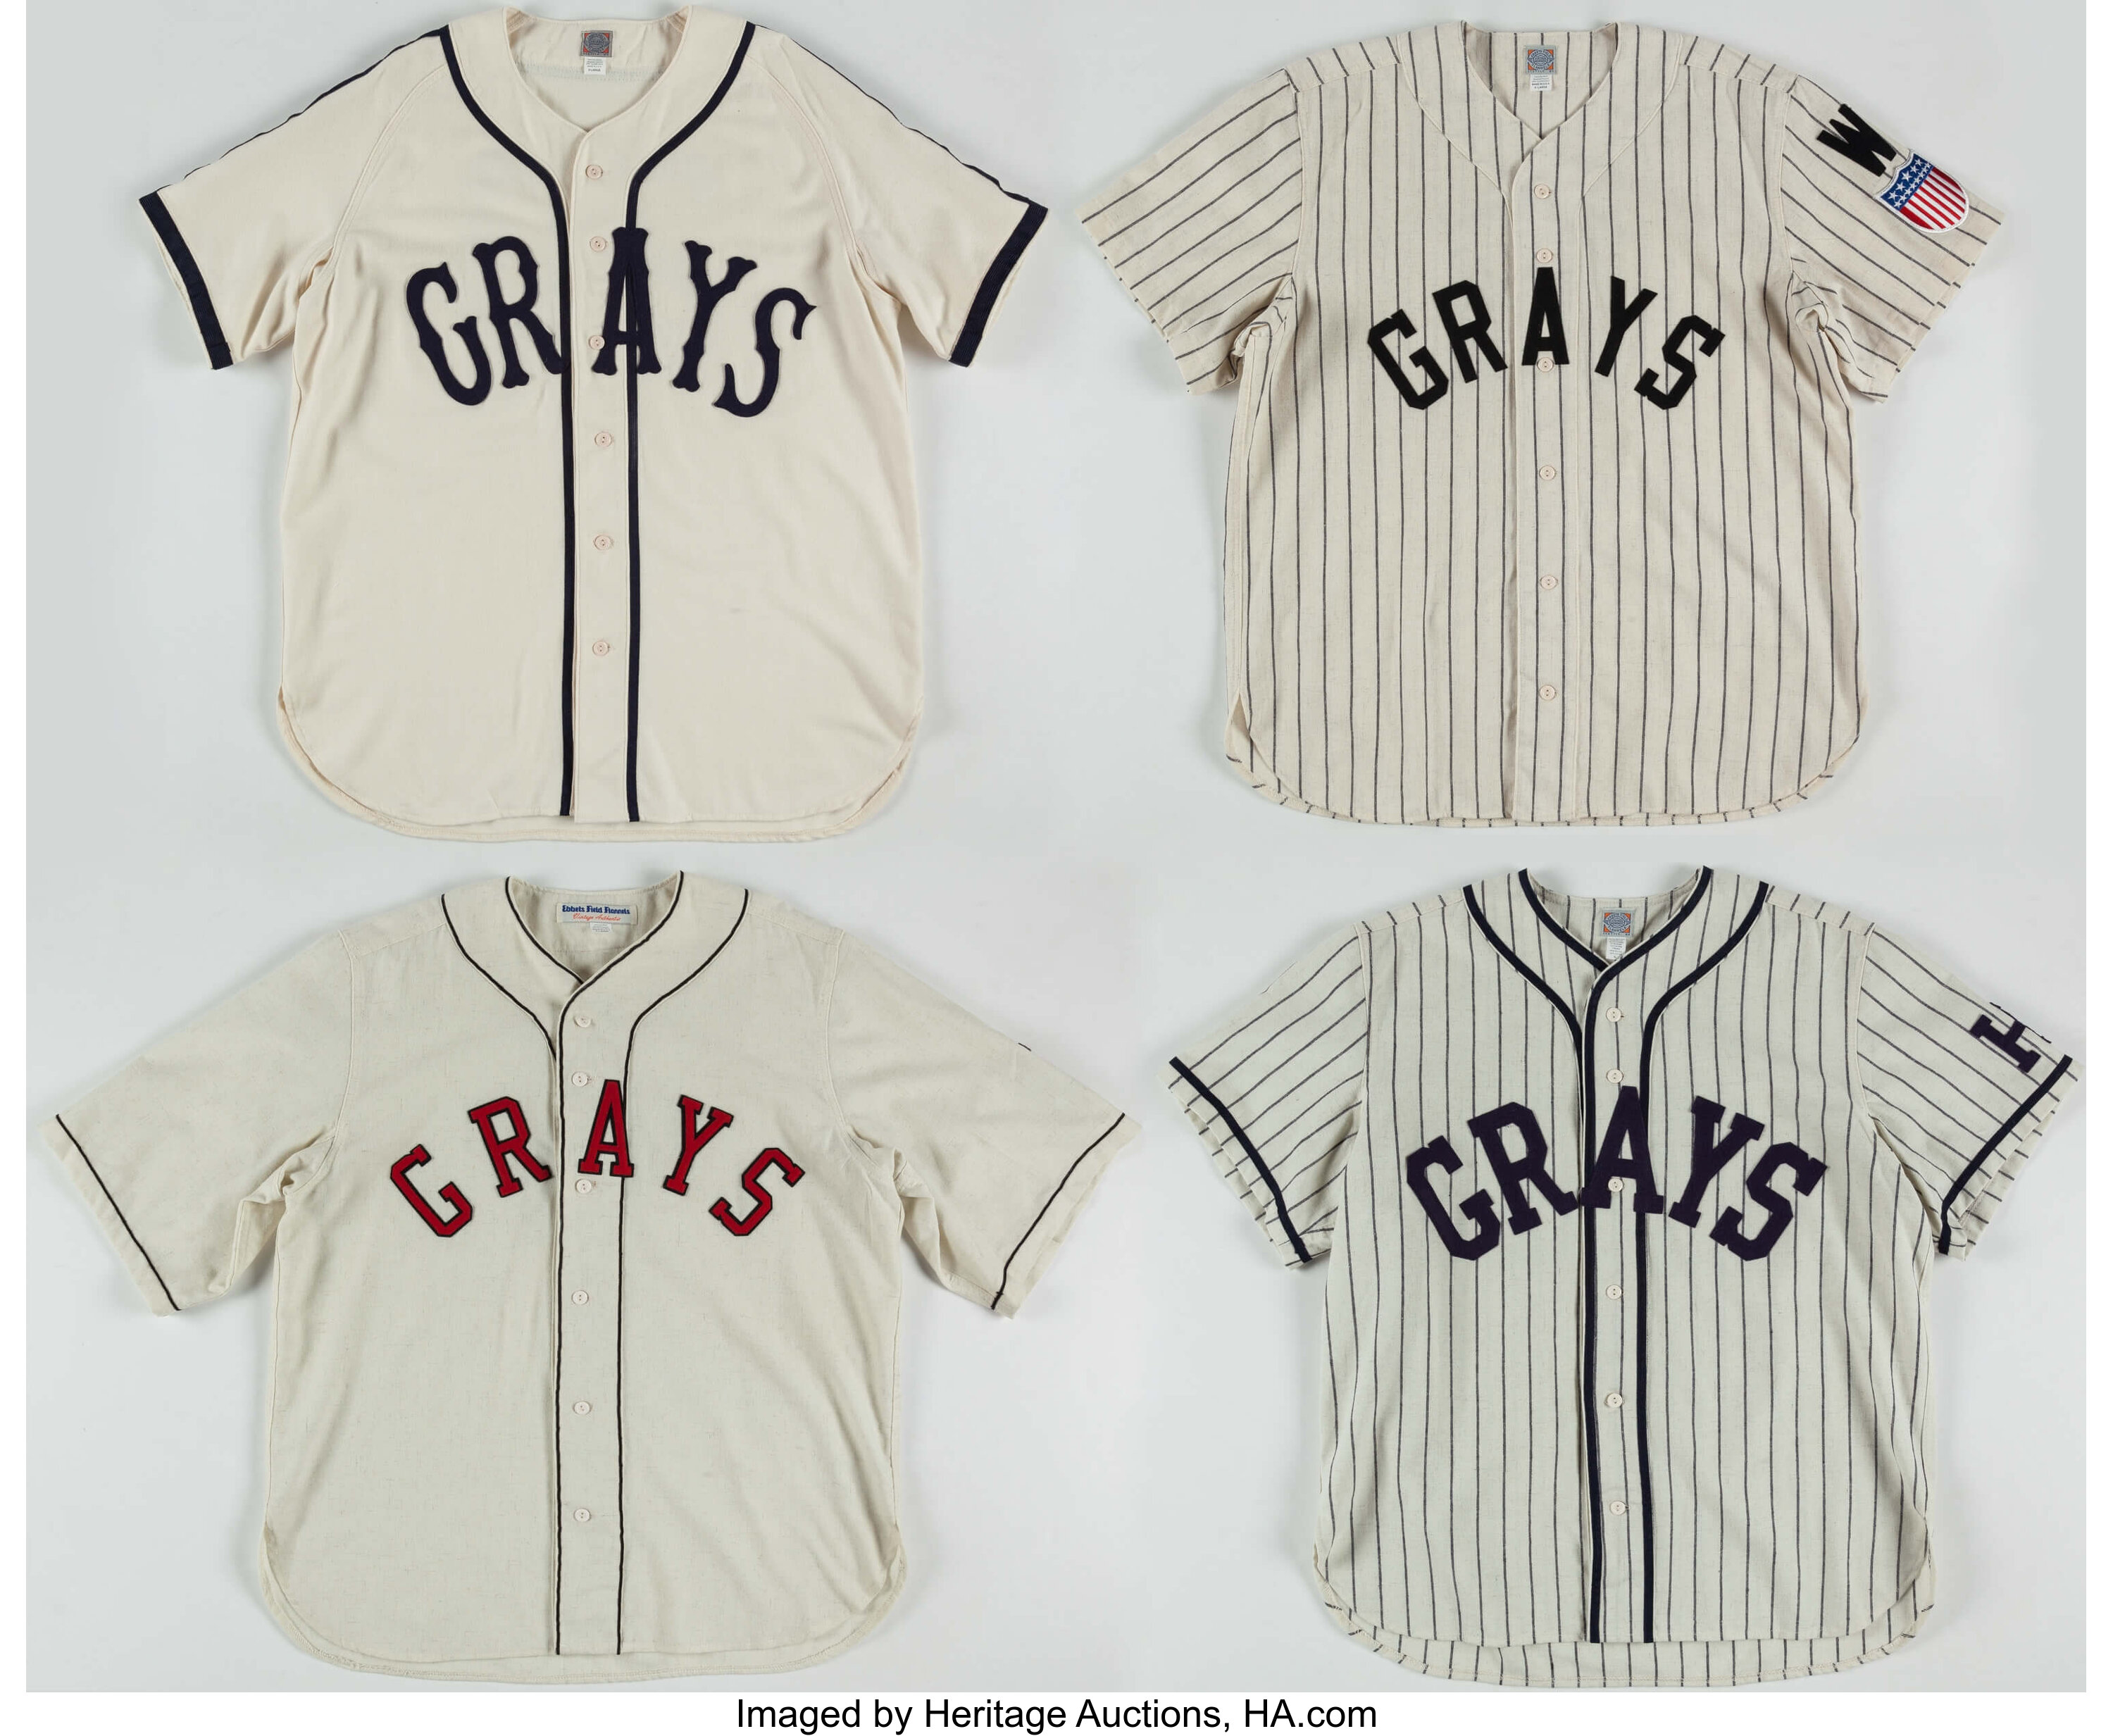 Ebbets Field Flannels makes replica jerseys of teams gone by - 1889 Magazine